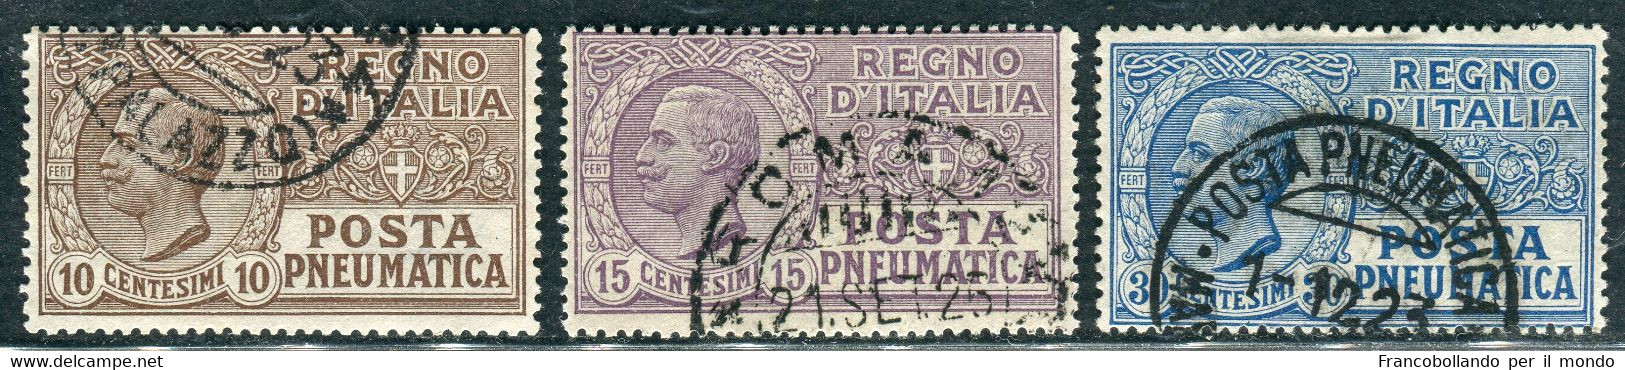 1913/23 Regno D'Italia Posta Pneumatica Set Usato N° S1900 - Pneumatic Mail